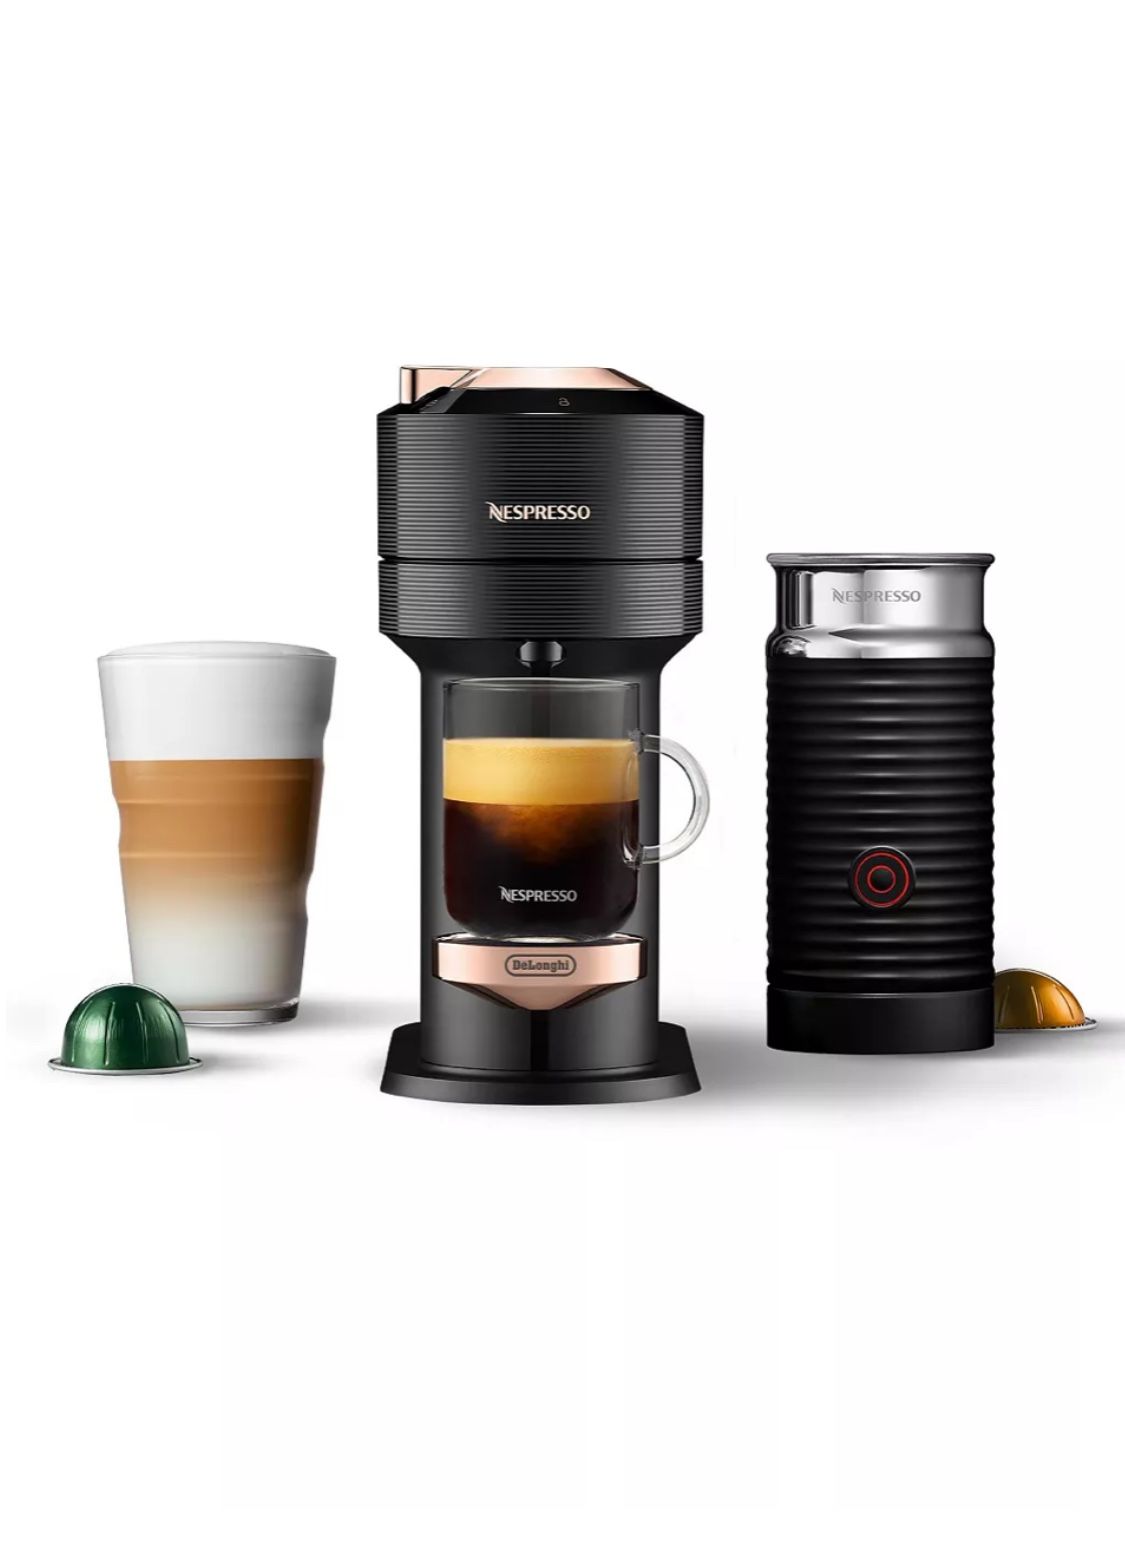 NESPRESSO Vertuo Next Premium Coffee and Espresso Maker by DeLonghi, Black Rose Gold with Aeroccino Milk Frother